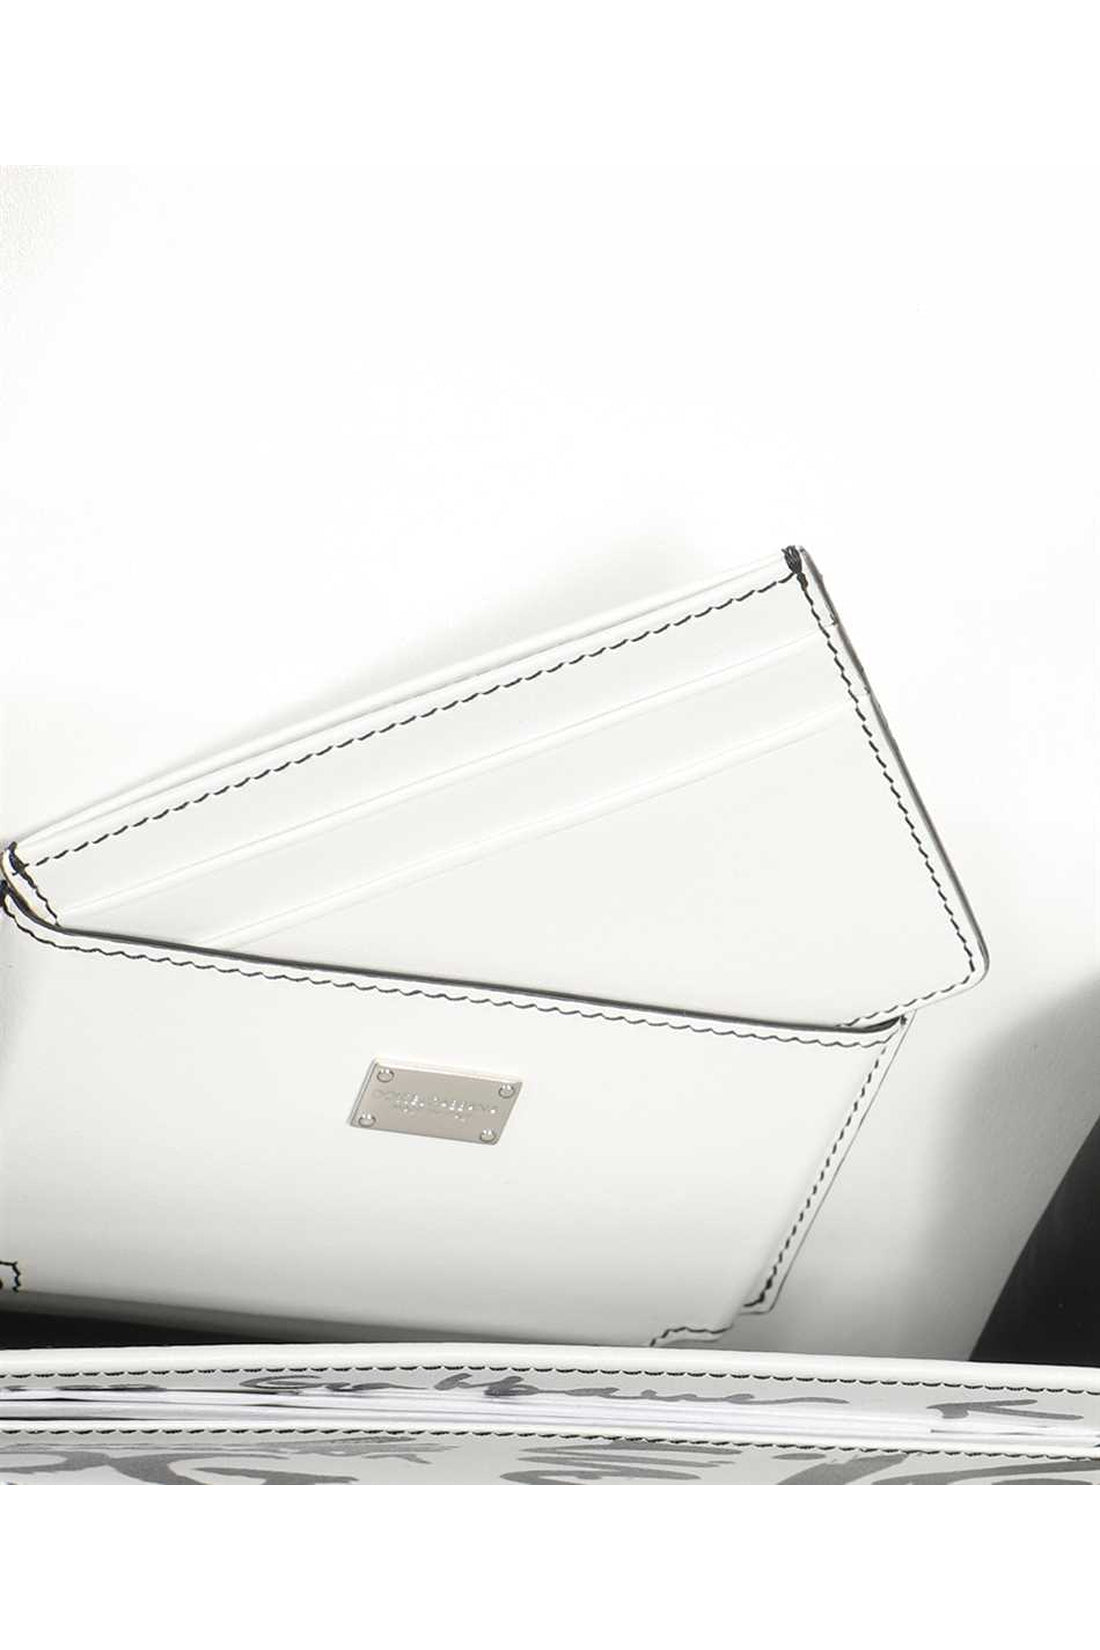 Dolce & Gabbana-OUTLET-SALE-Printed leather mini-bag-ARCHIVIST